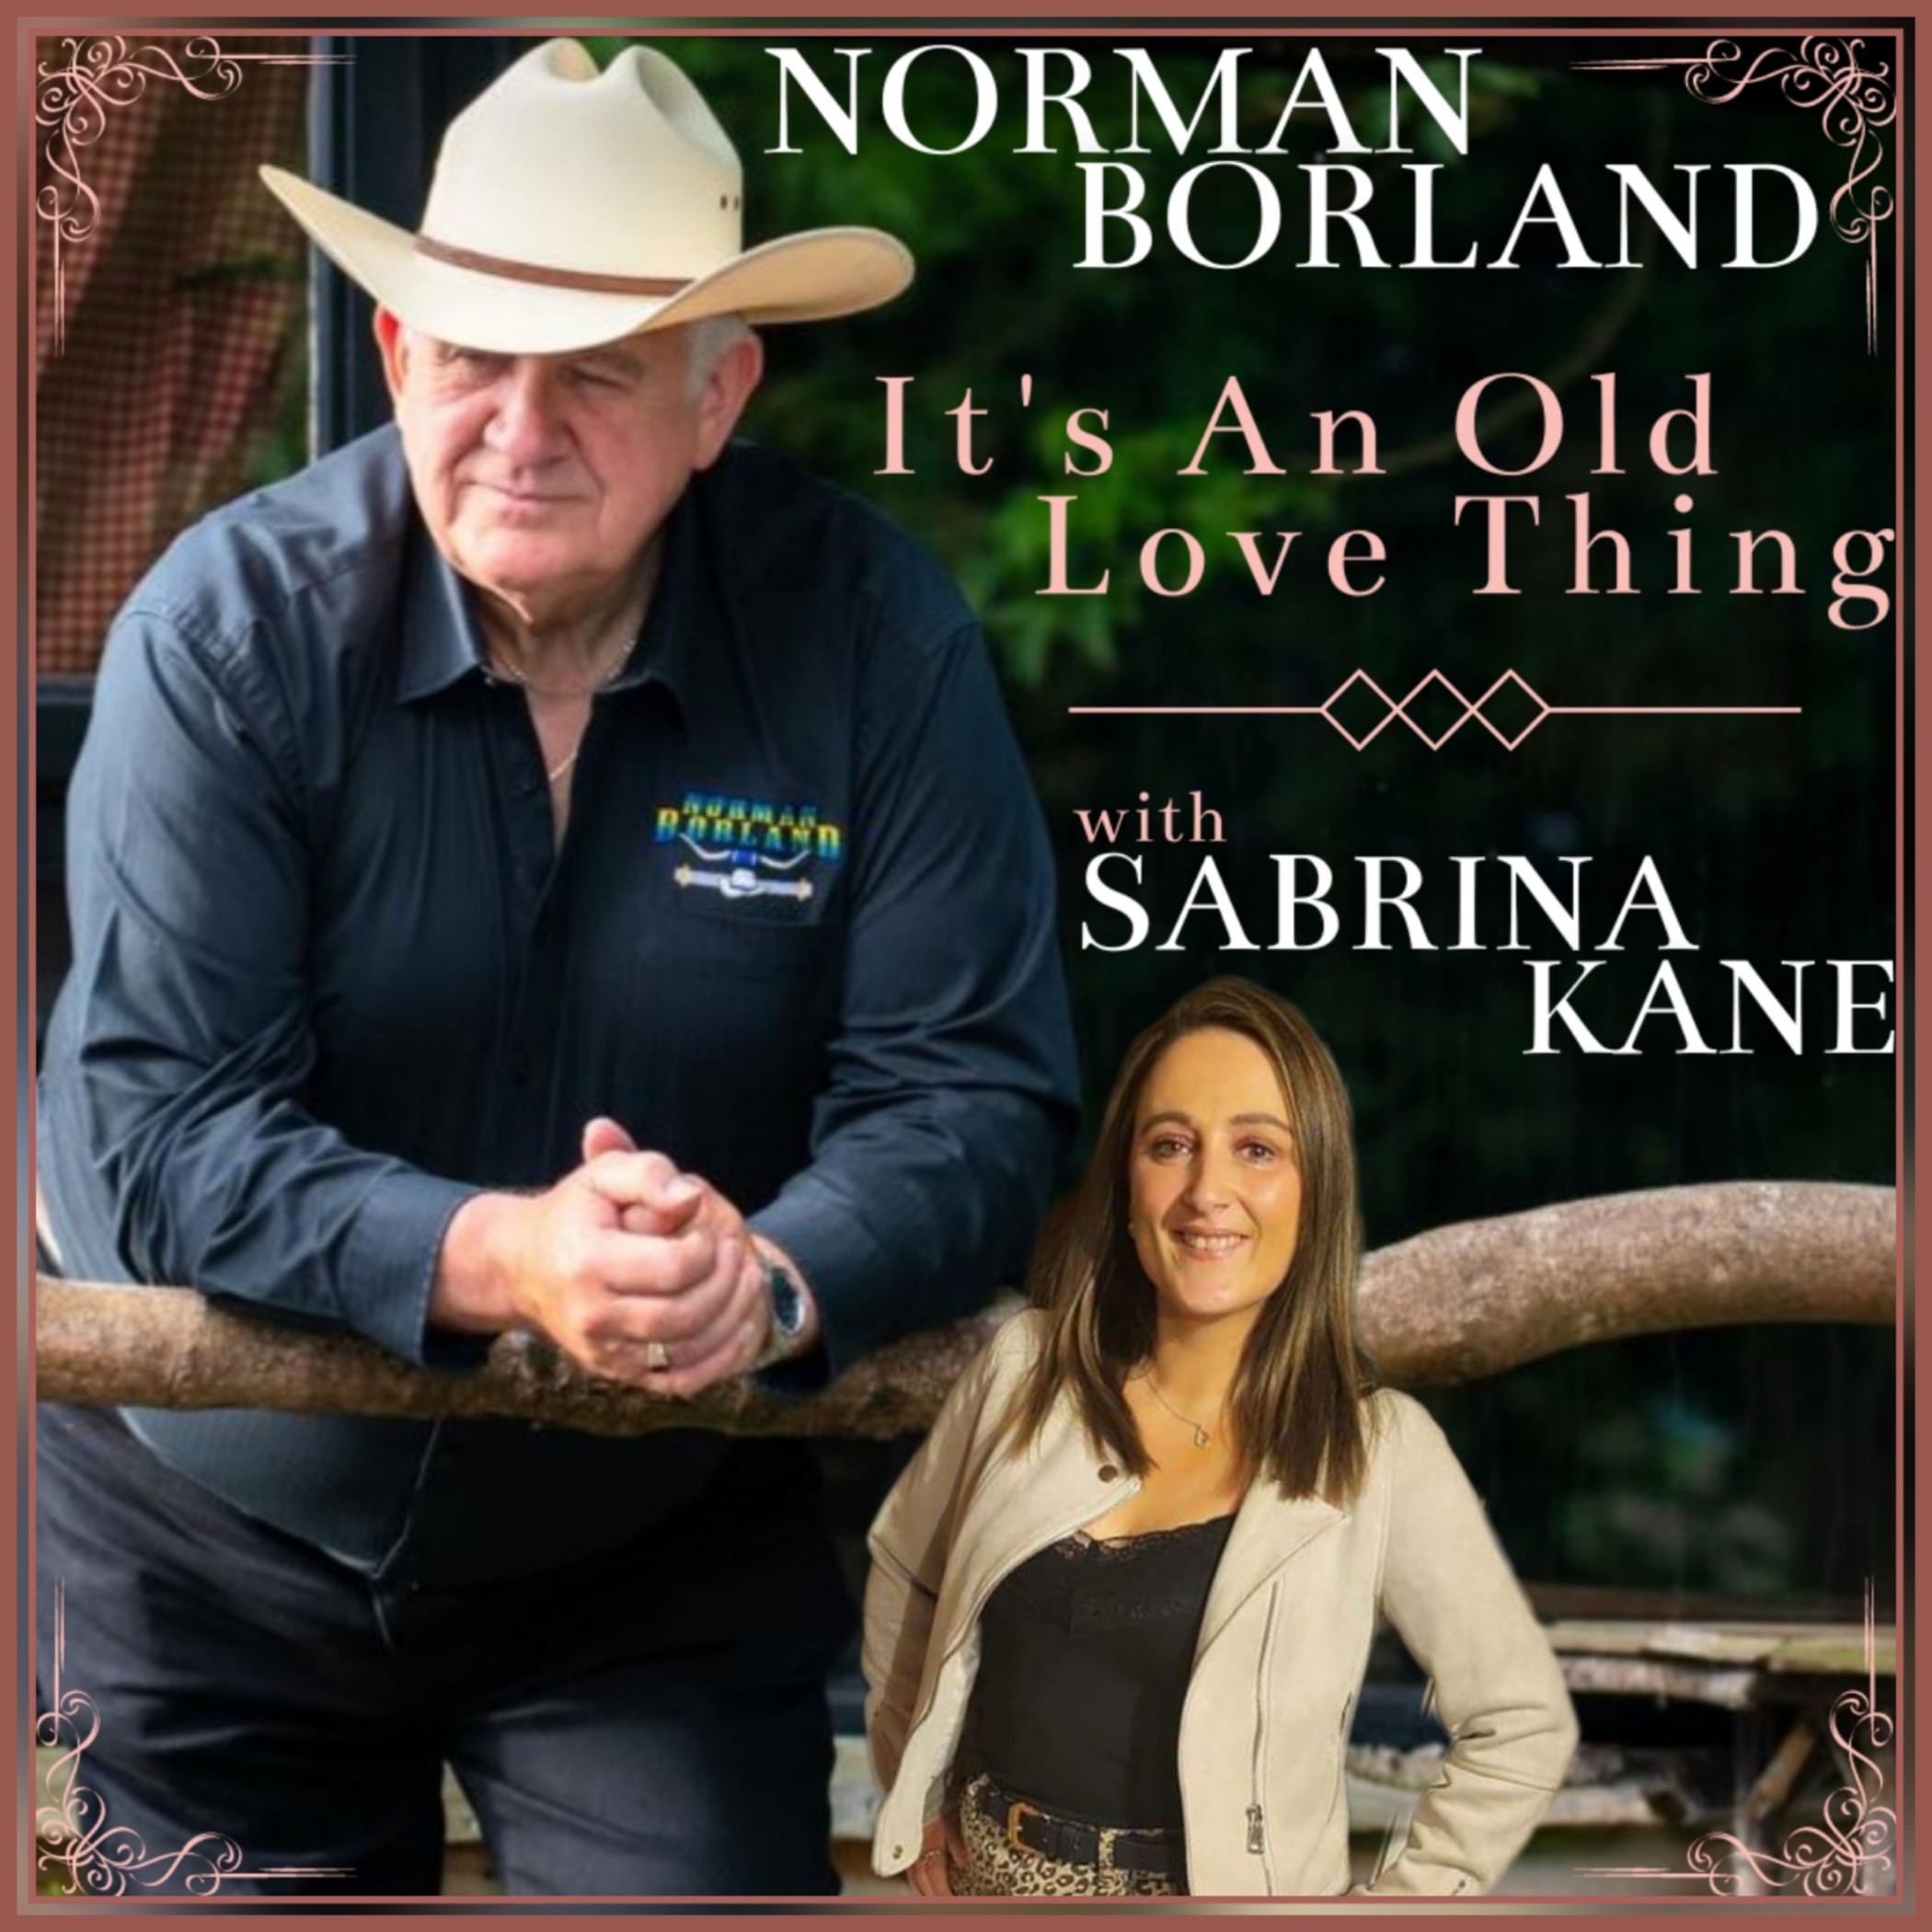 Norman Borland and Sabrina Kane